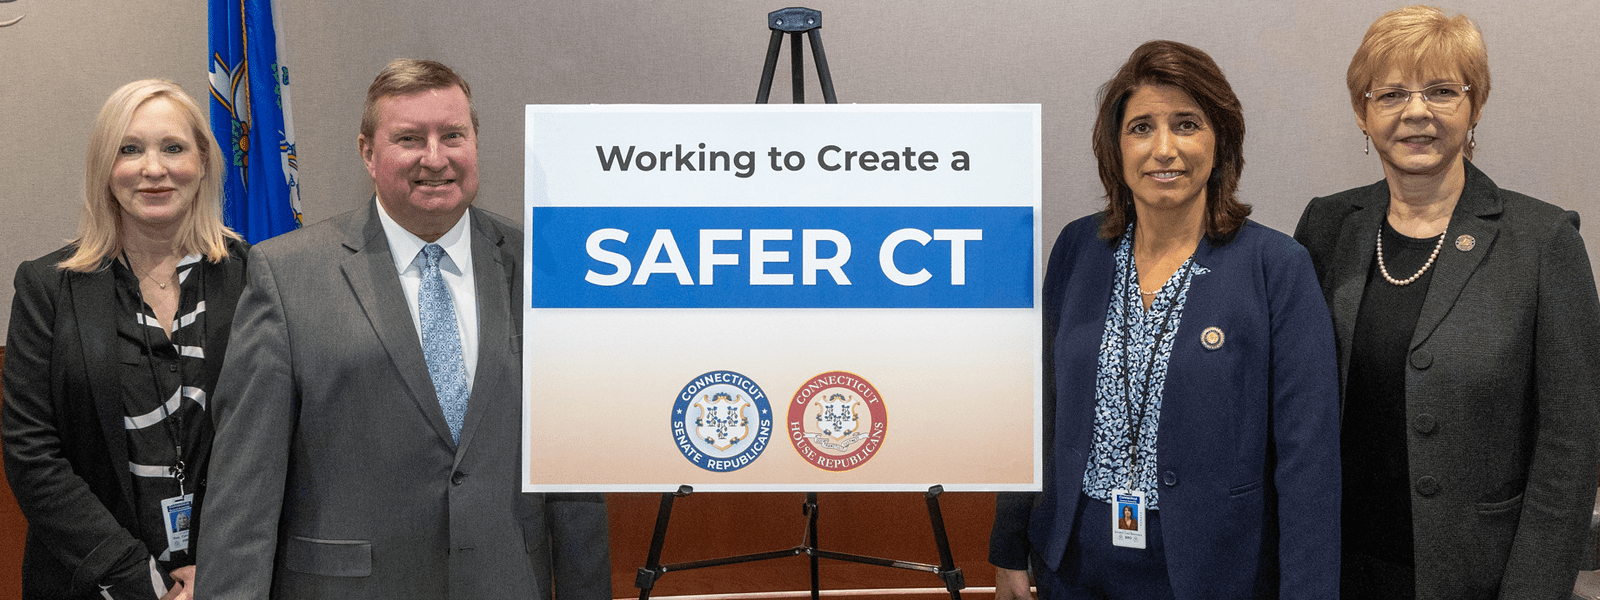 North-central CT Republicans Outline Proposals to Make CT Safer